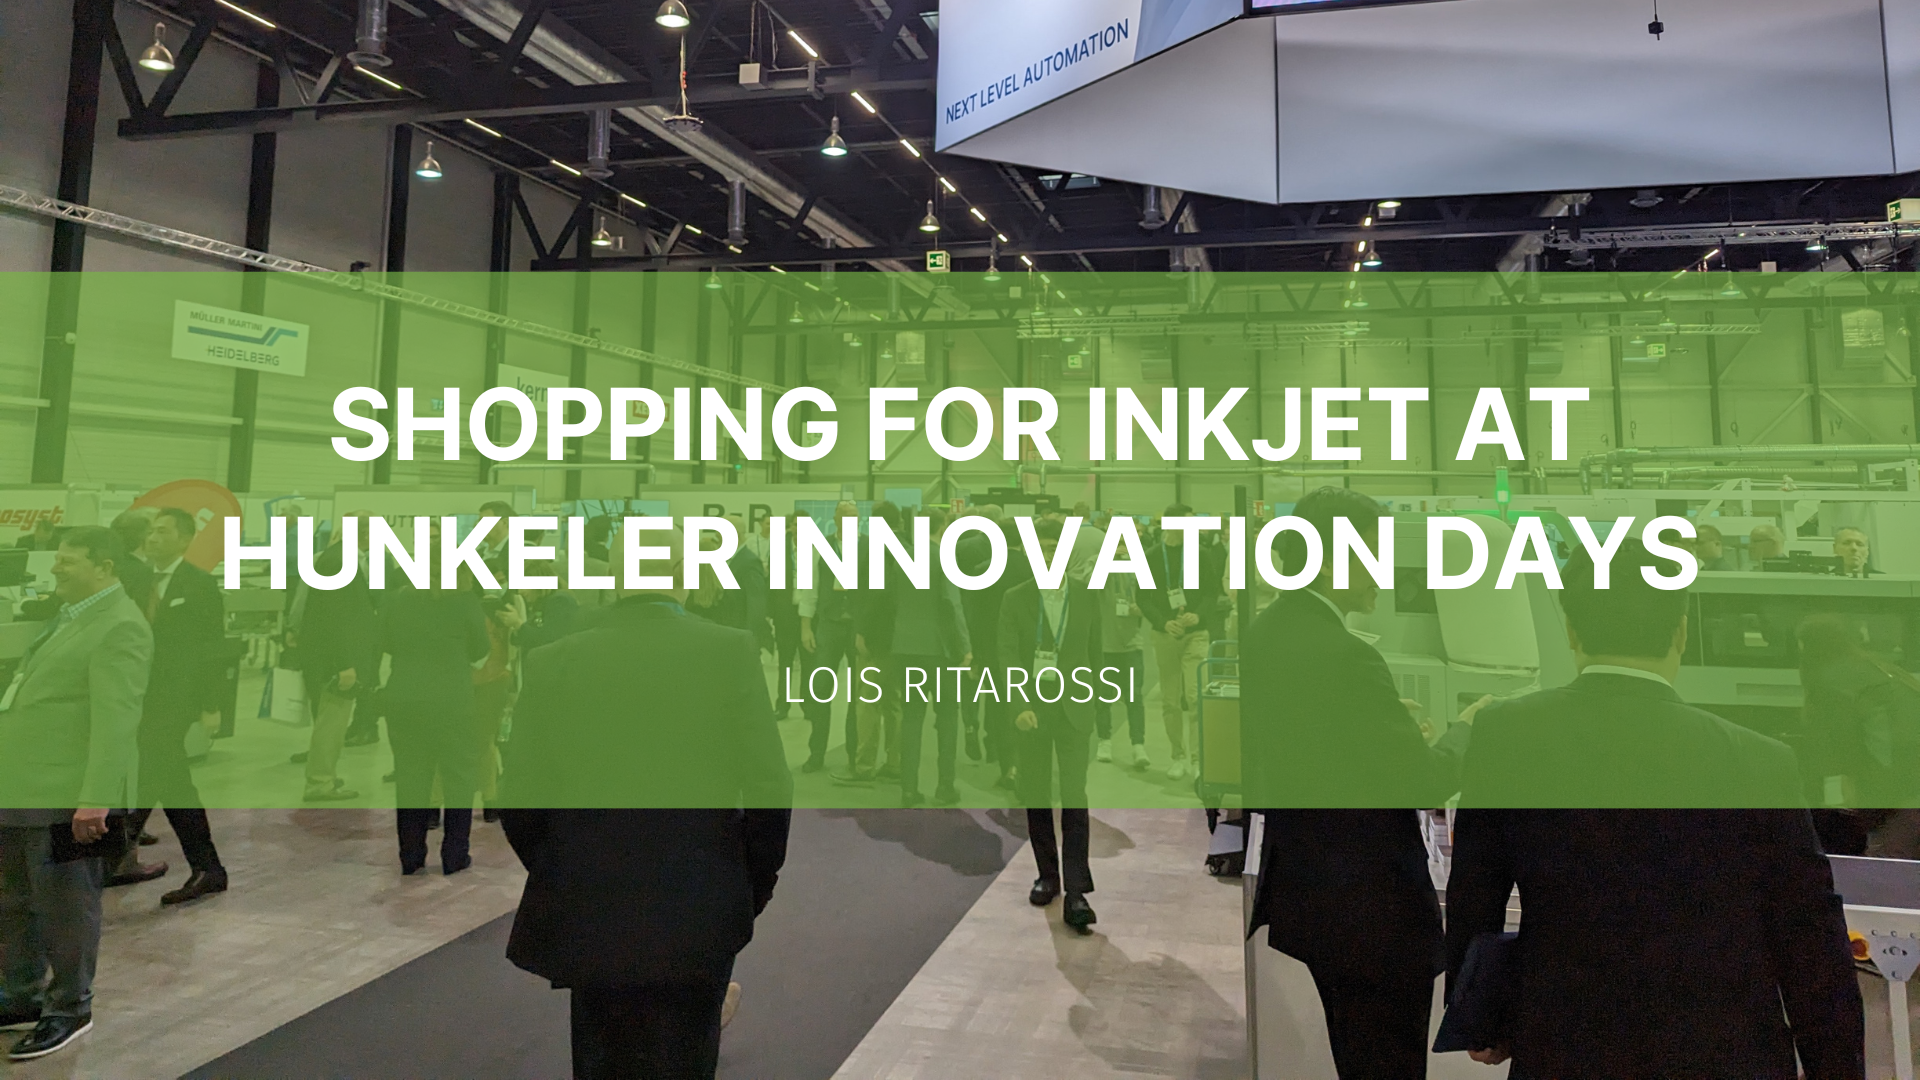 Featured image for “Shopping for Inkjet at Hunkeler Innovation Days”